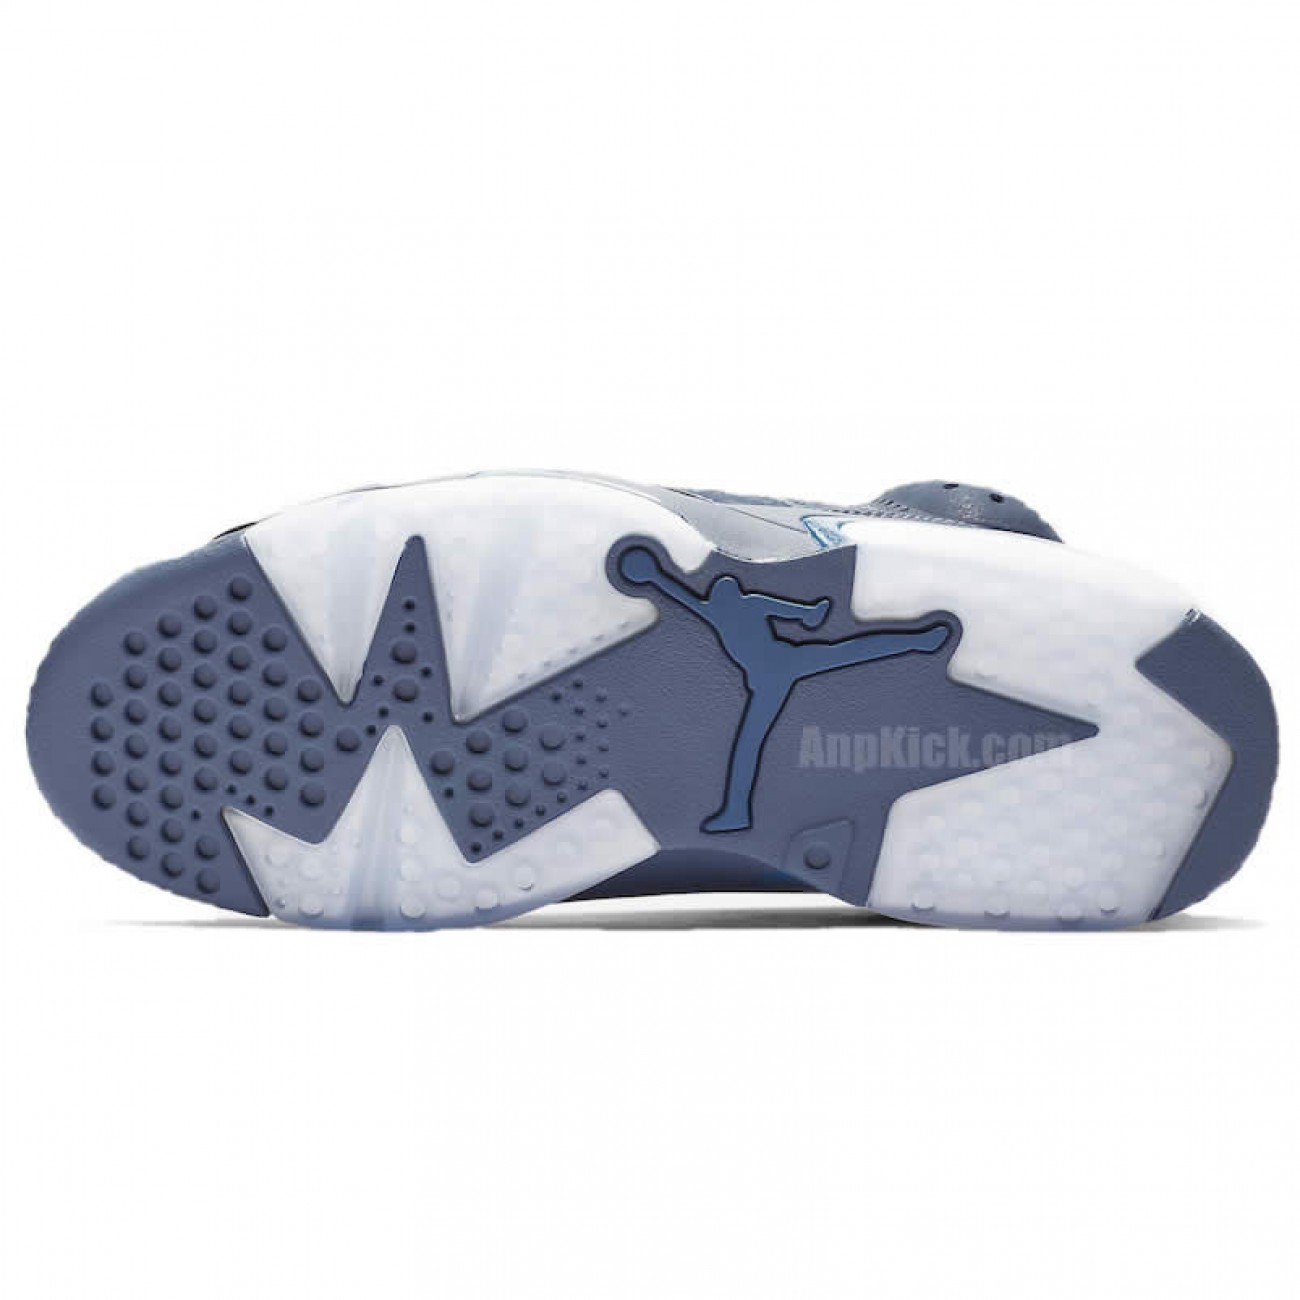 Air Jordan 6 "Jimmy Butler" PE Diffused Blue On Feet 384664-400